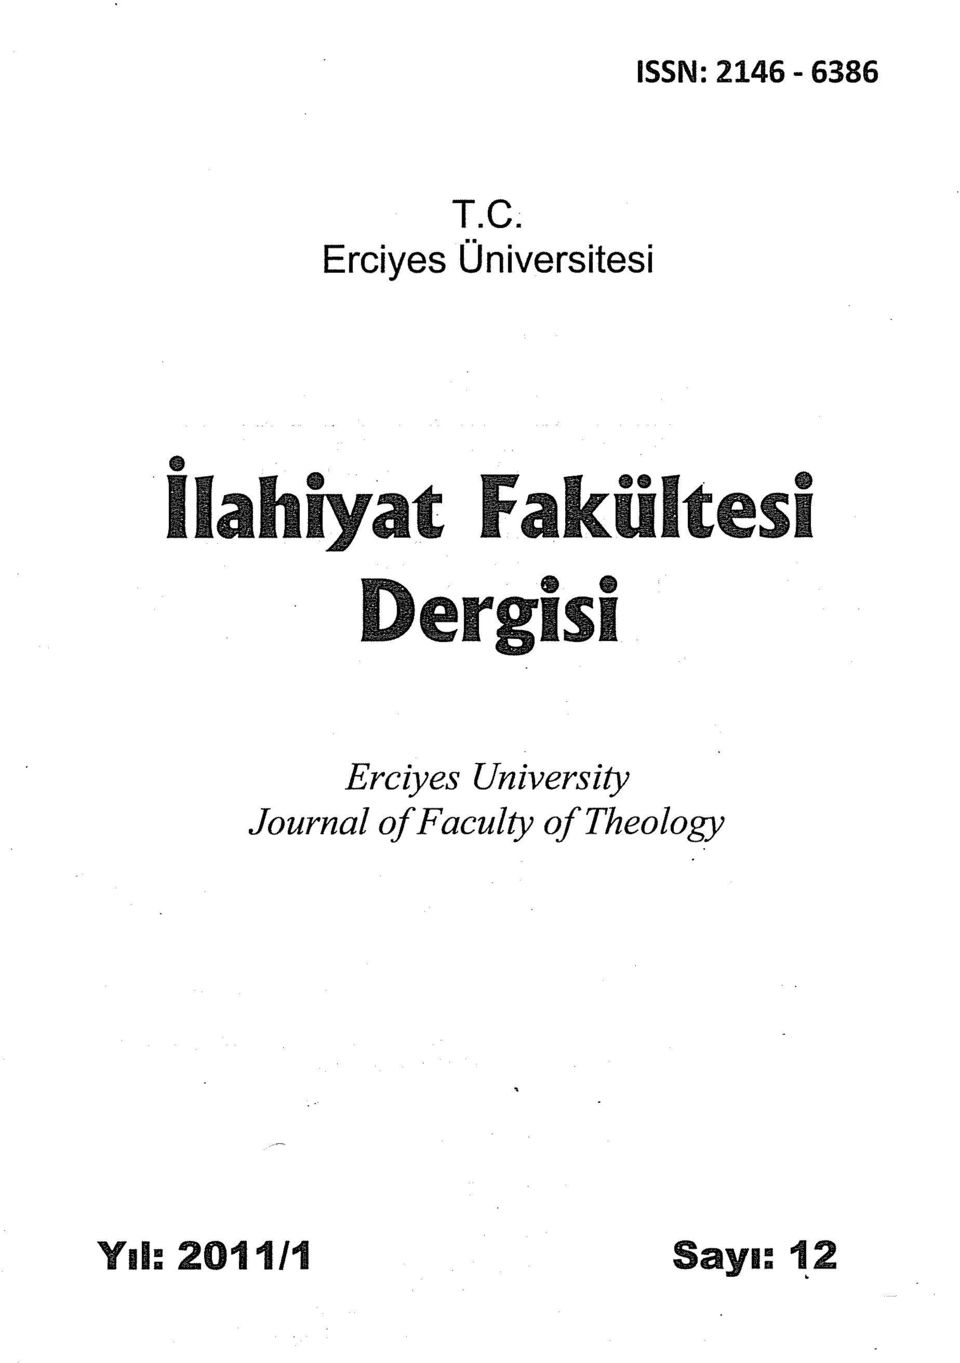 ergısı Erciyes University